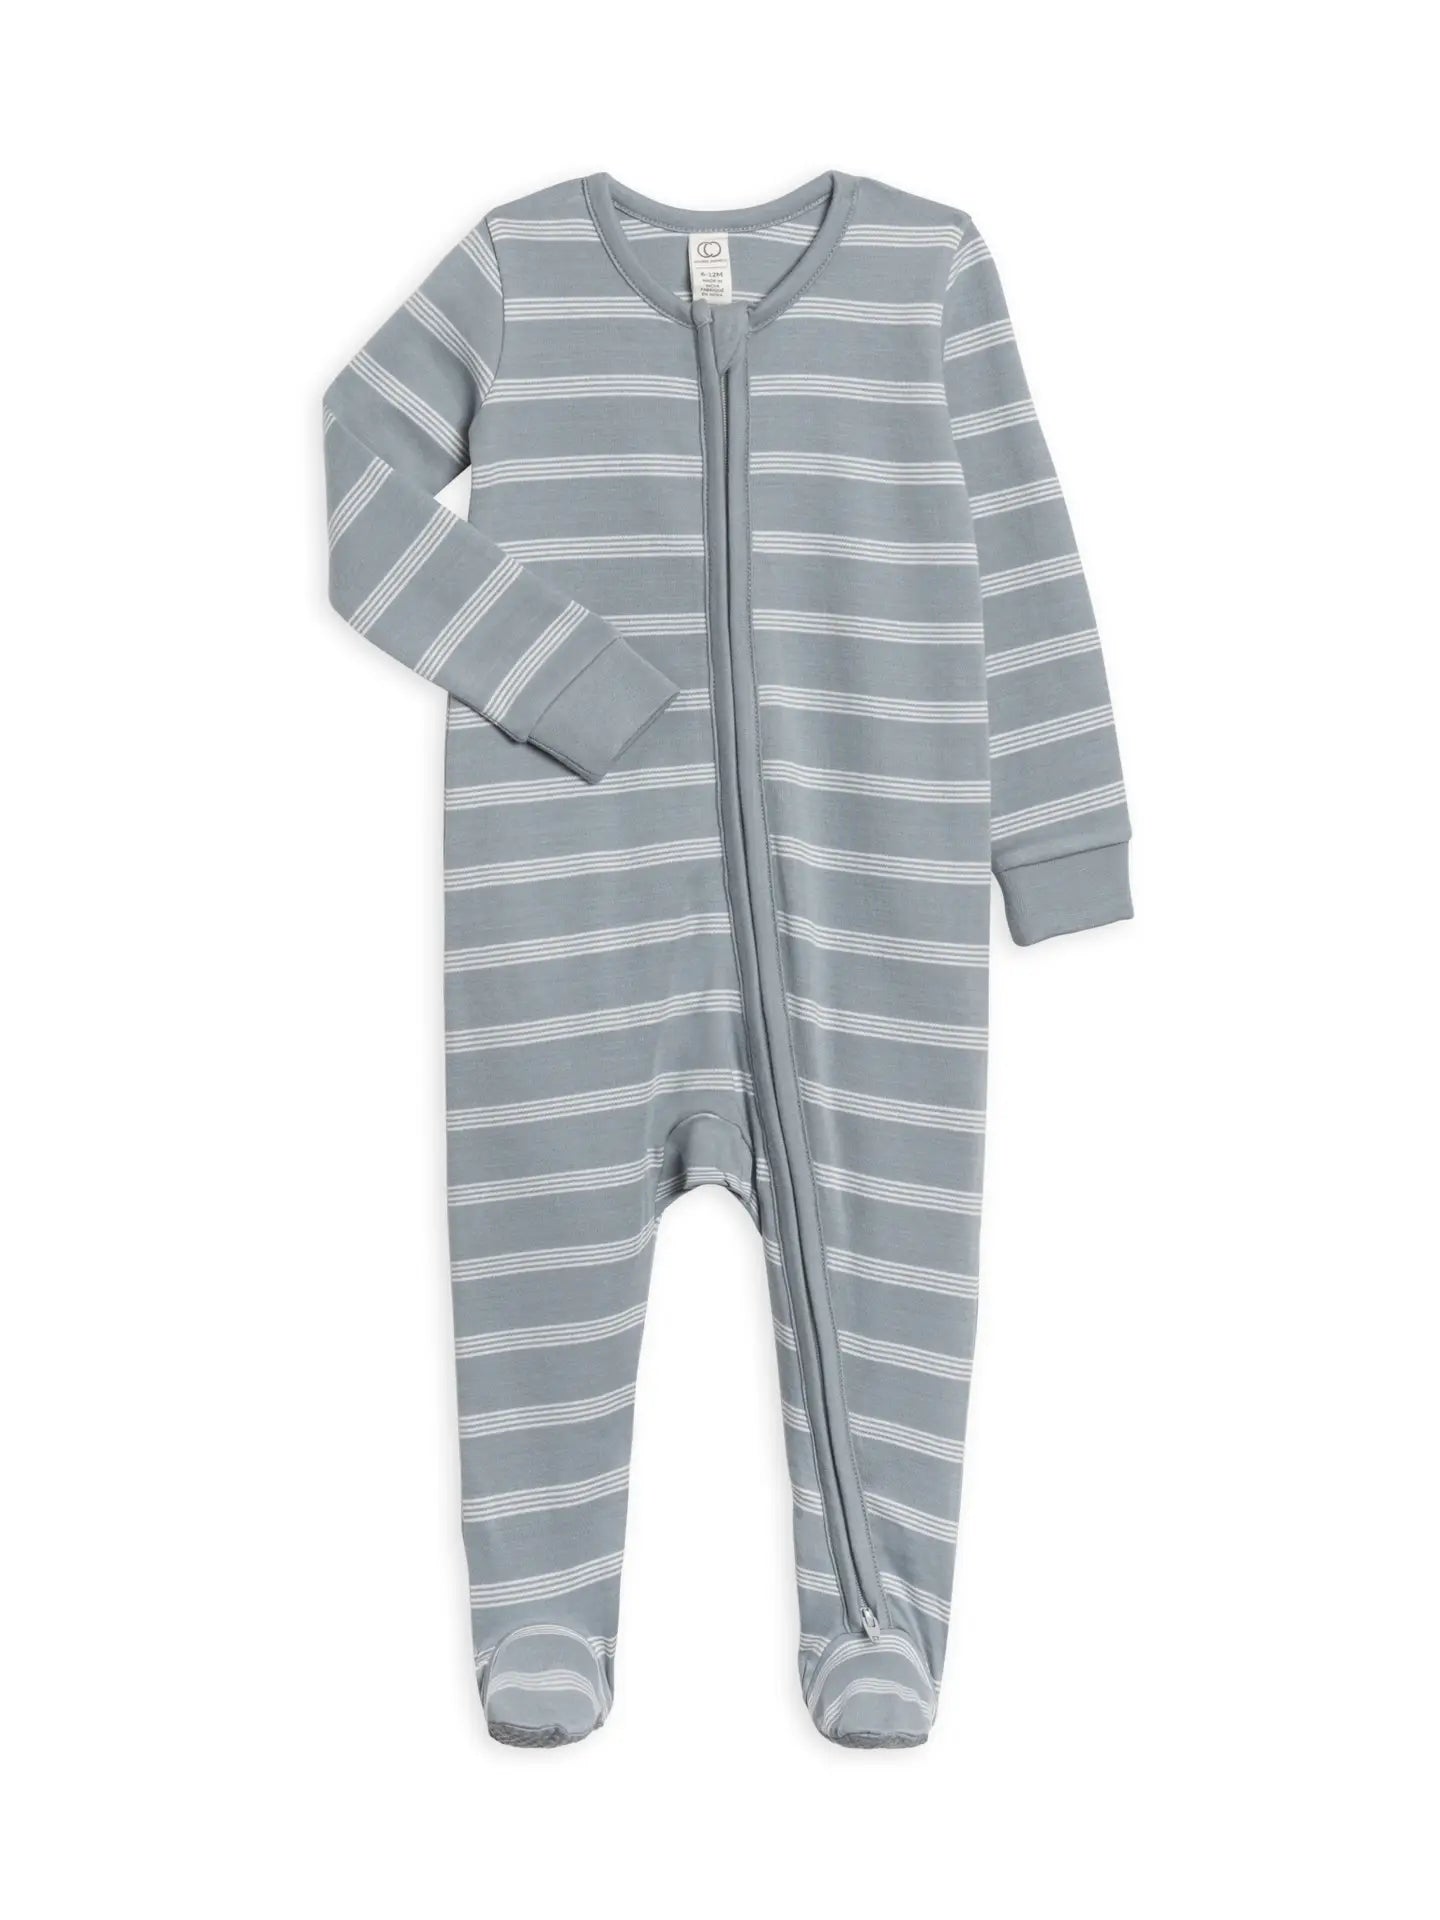 Organic Baby Peyton Footed Sleeper - Drew Stripe / Mist